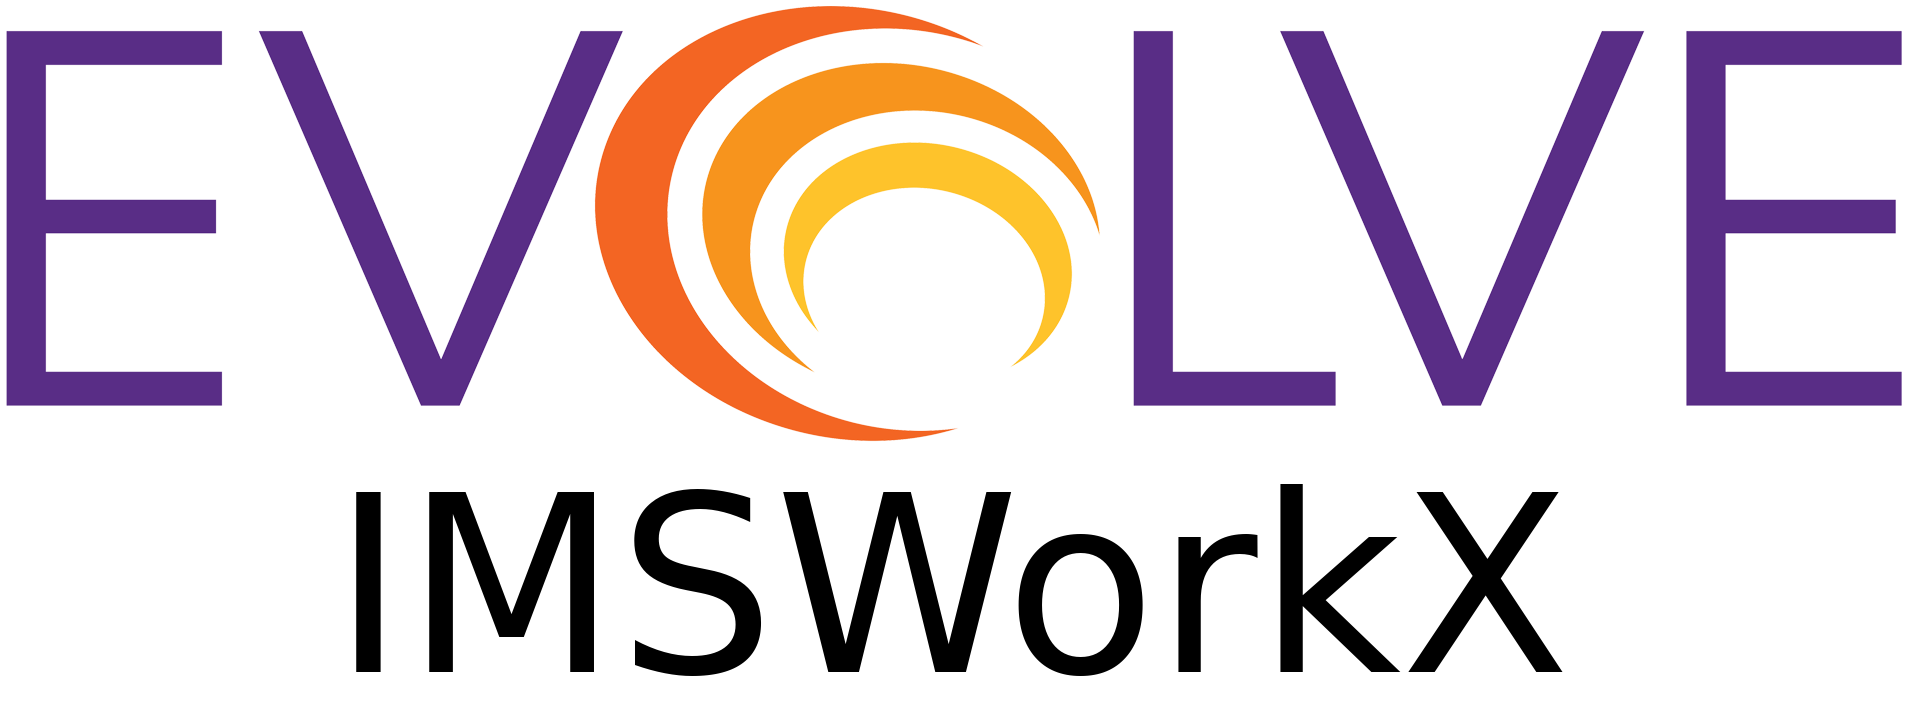 IMSWorkX Corporate Logo